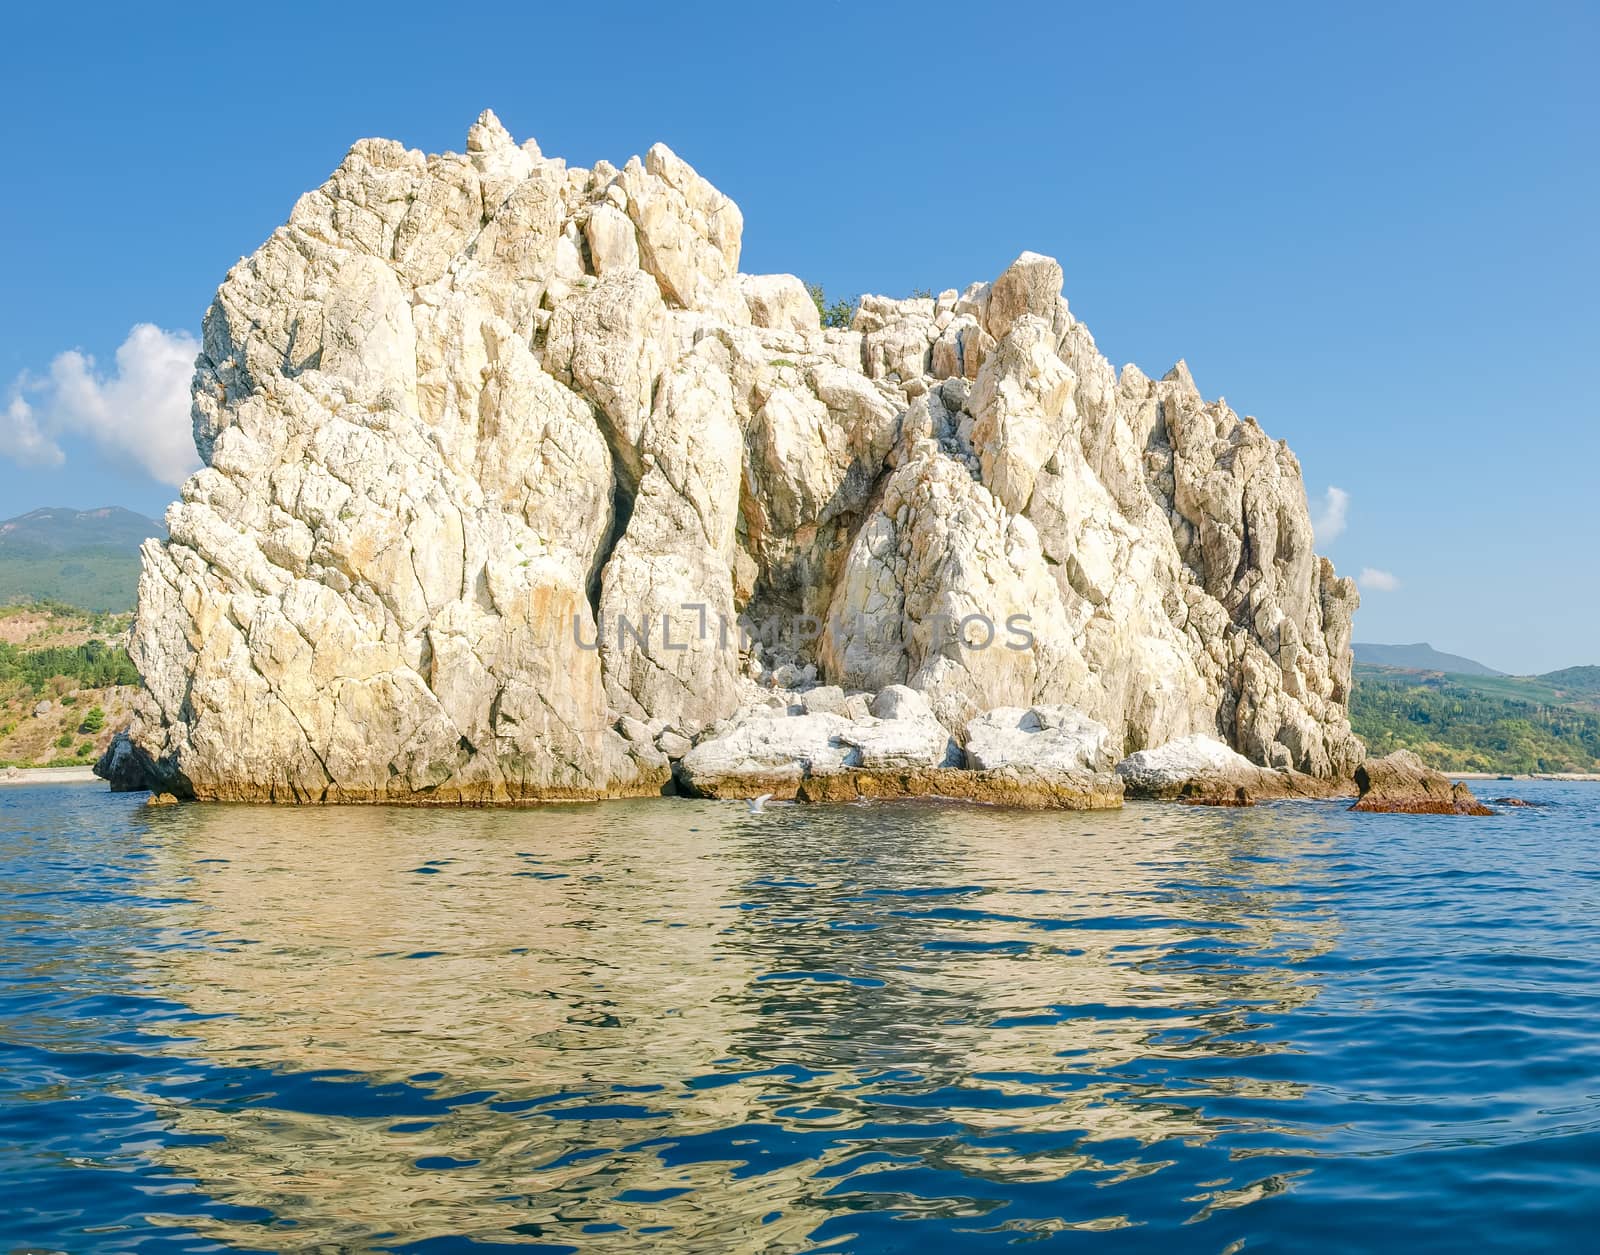 Single limestone rock in the sea near the shore by anmbph